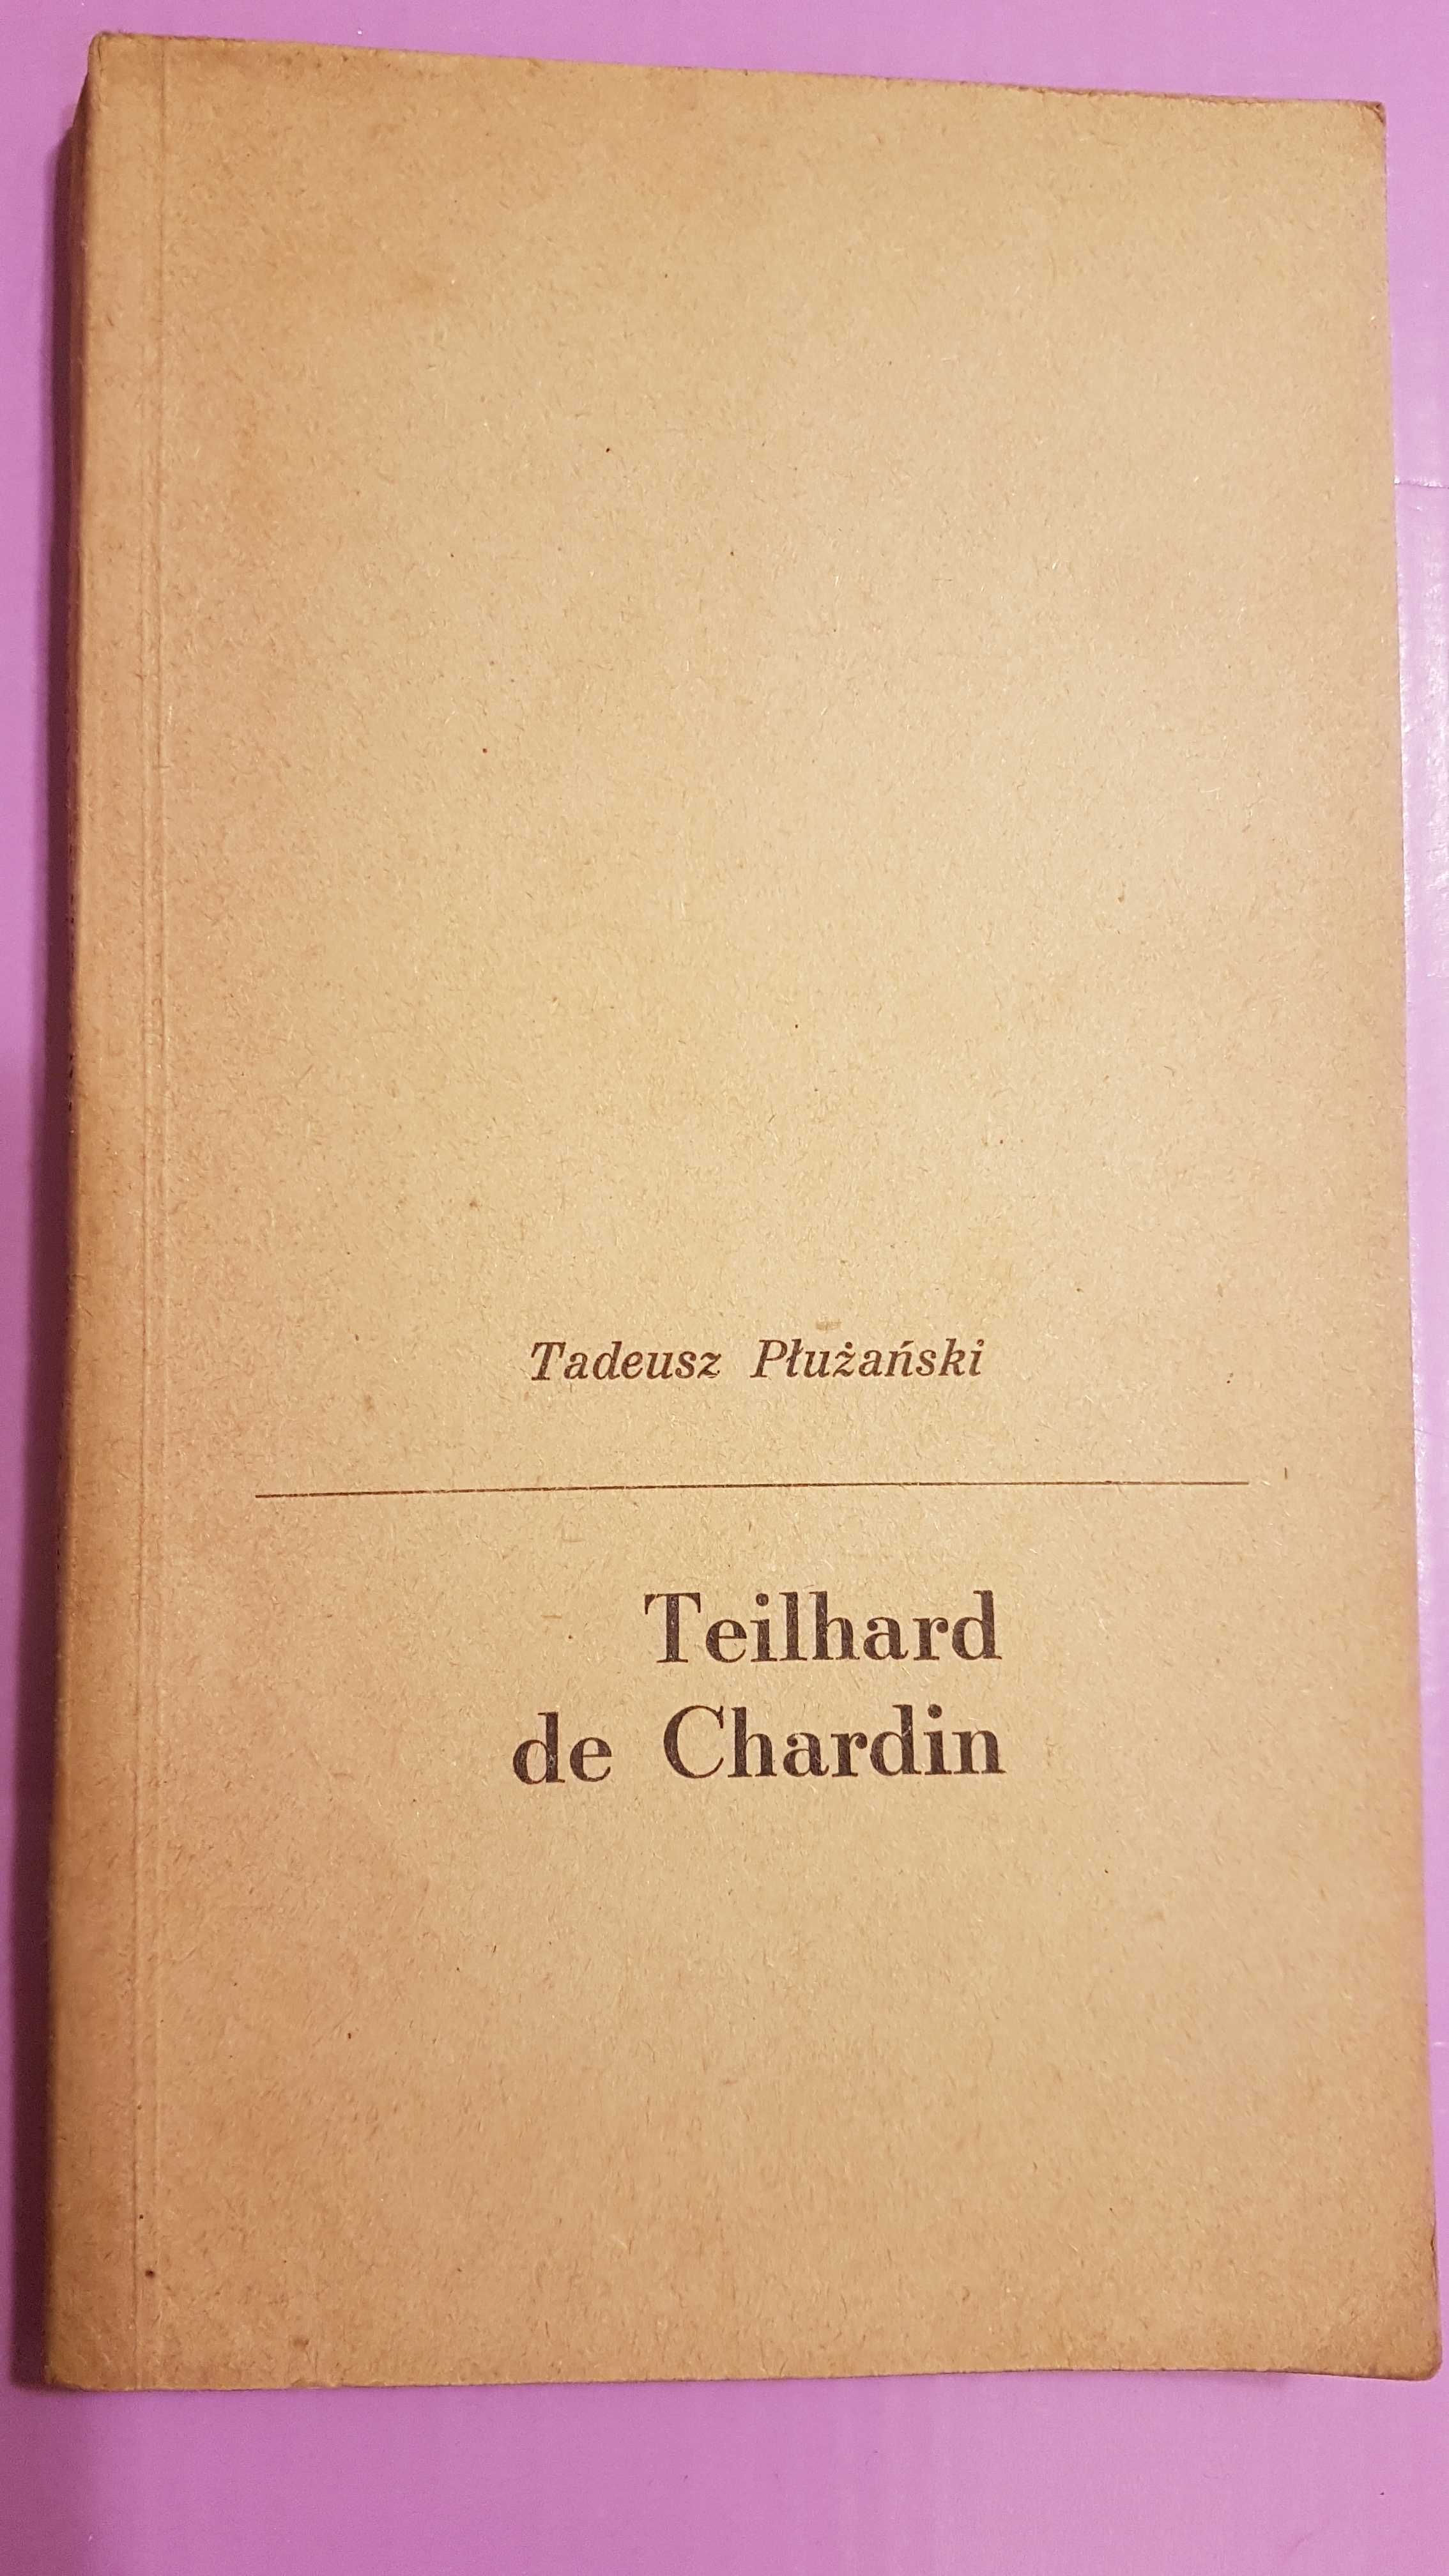 Tadeusz Płużański "Teilhard de Chardin"